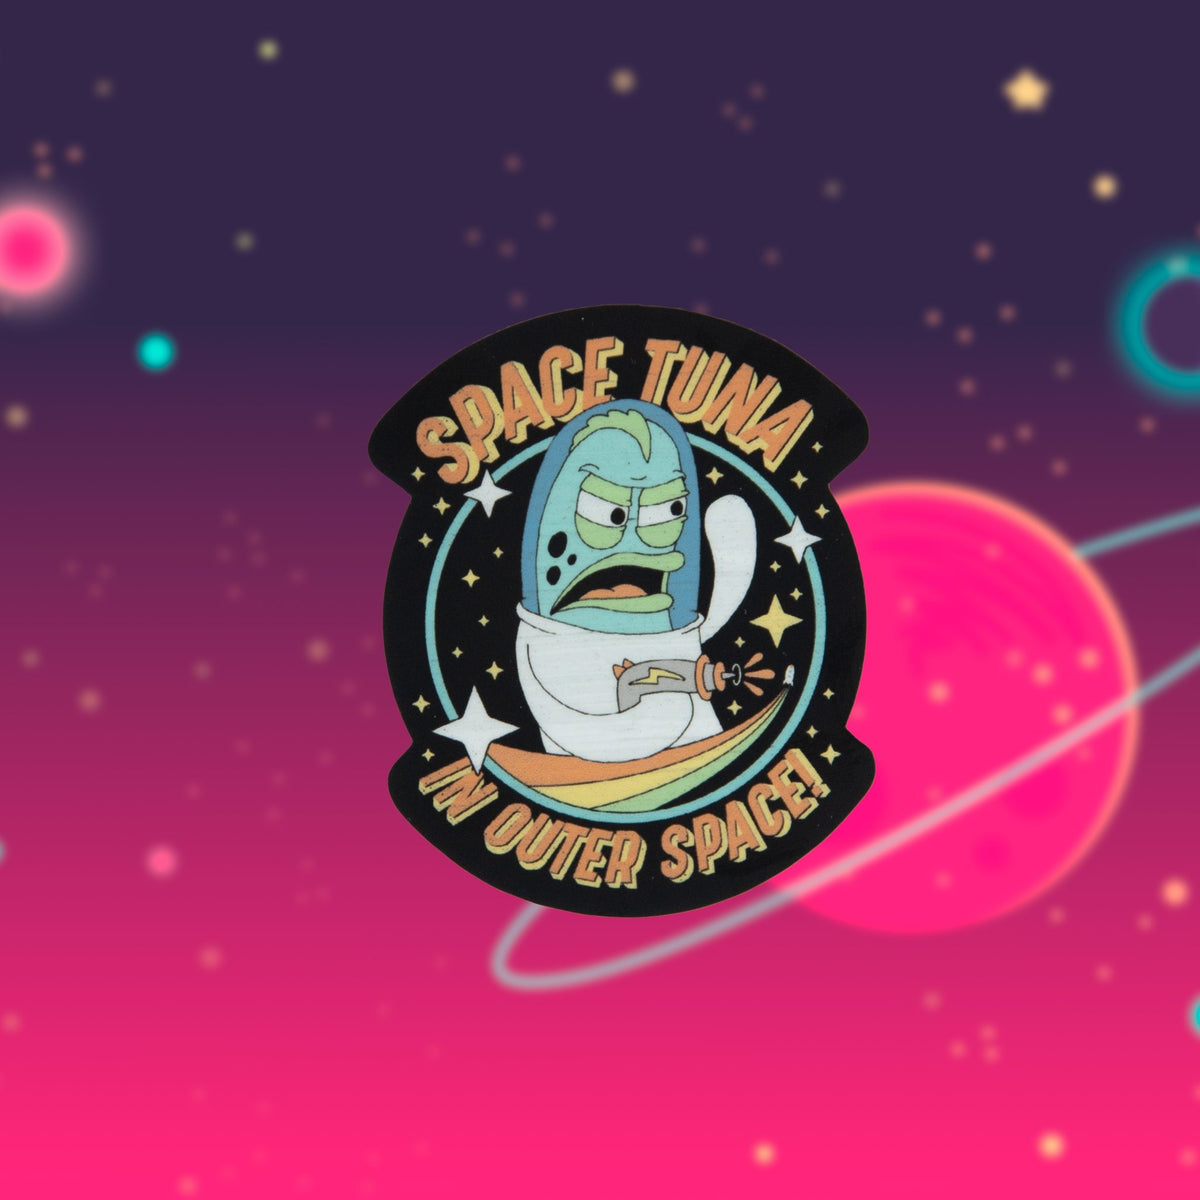 Space Tuna - menottees